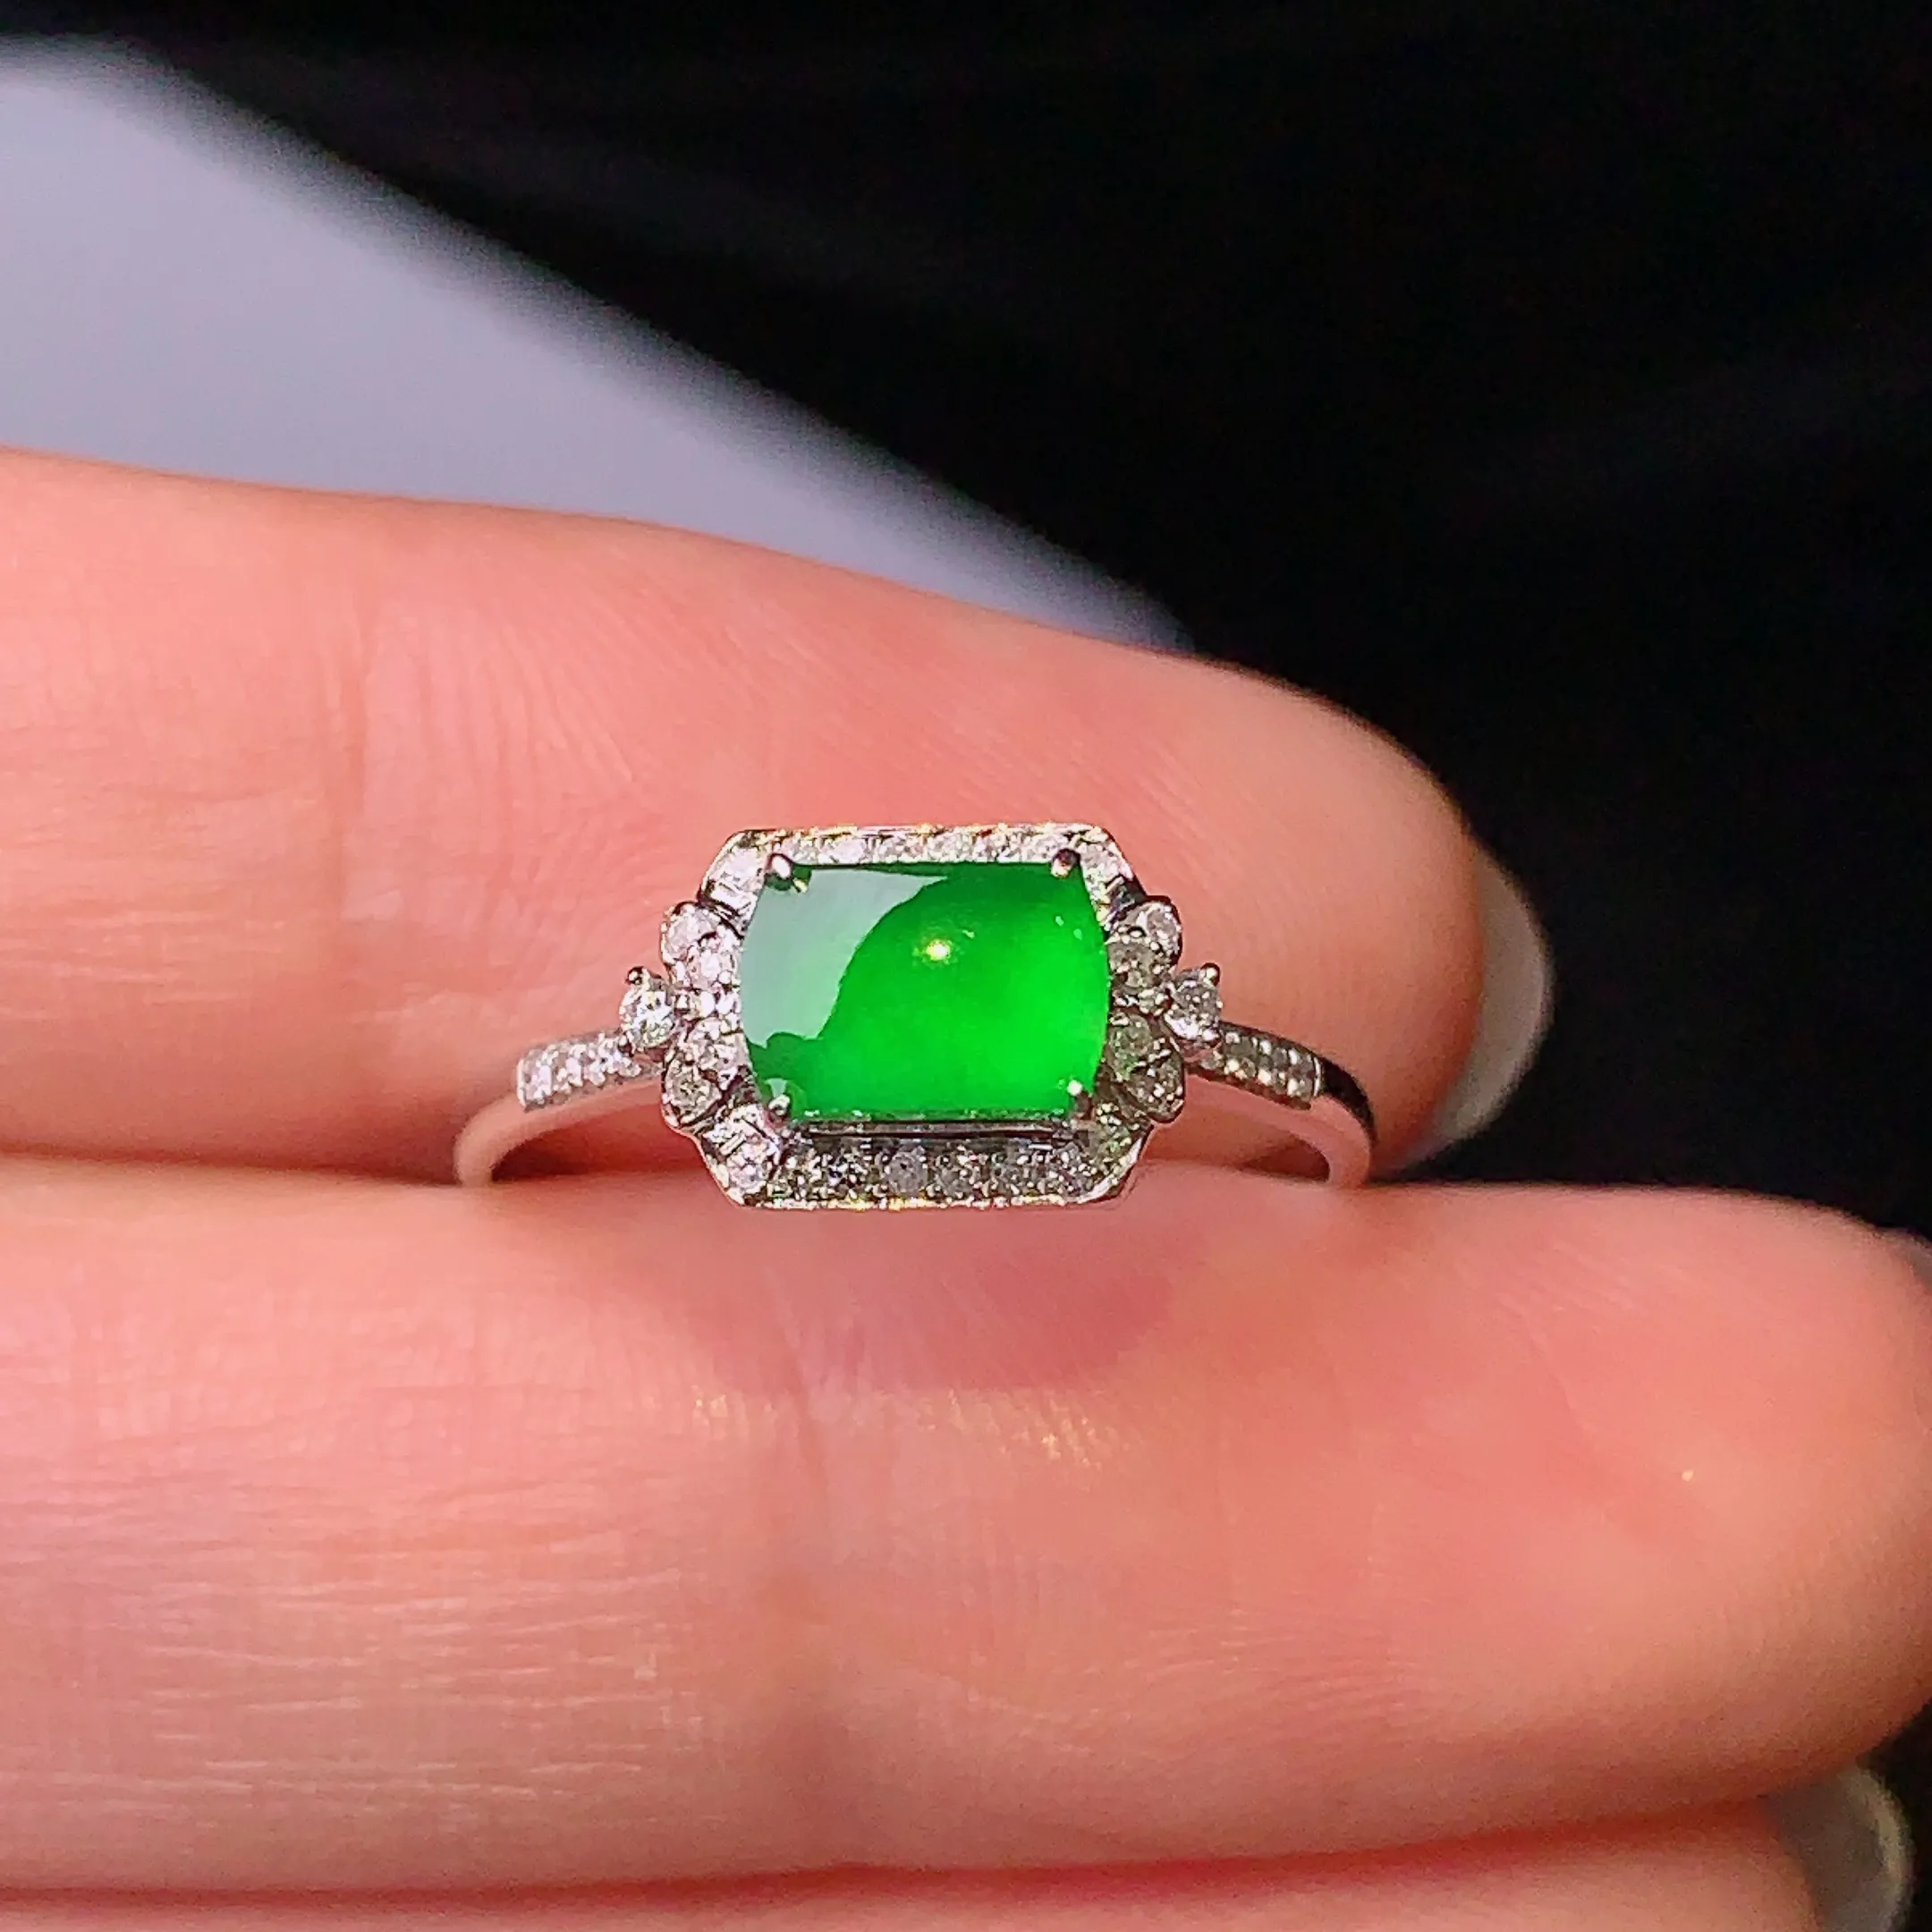 18k金钻镶嵌满绿无事牌戒指 玉质细腻 色泽艳丽 款式新颖时尚高贵大气 圈口13 整体尺寸7*10.